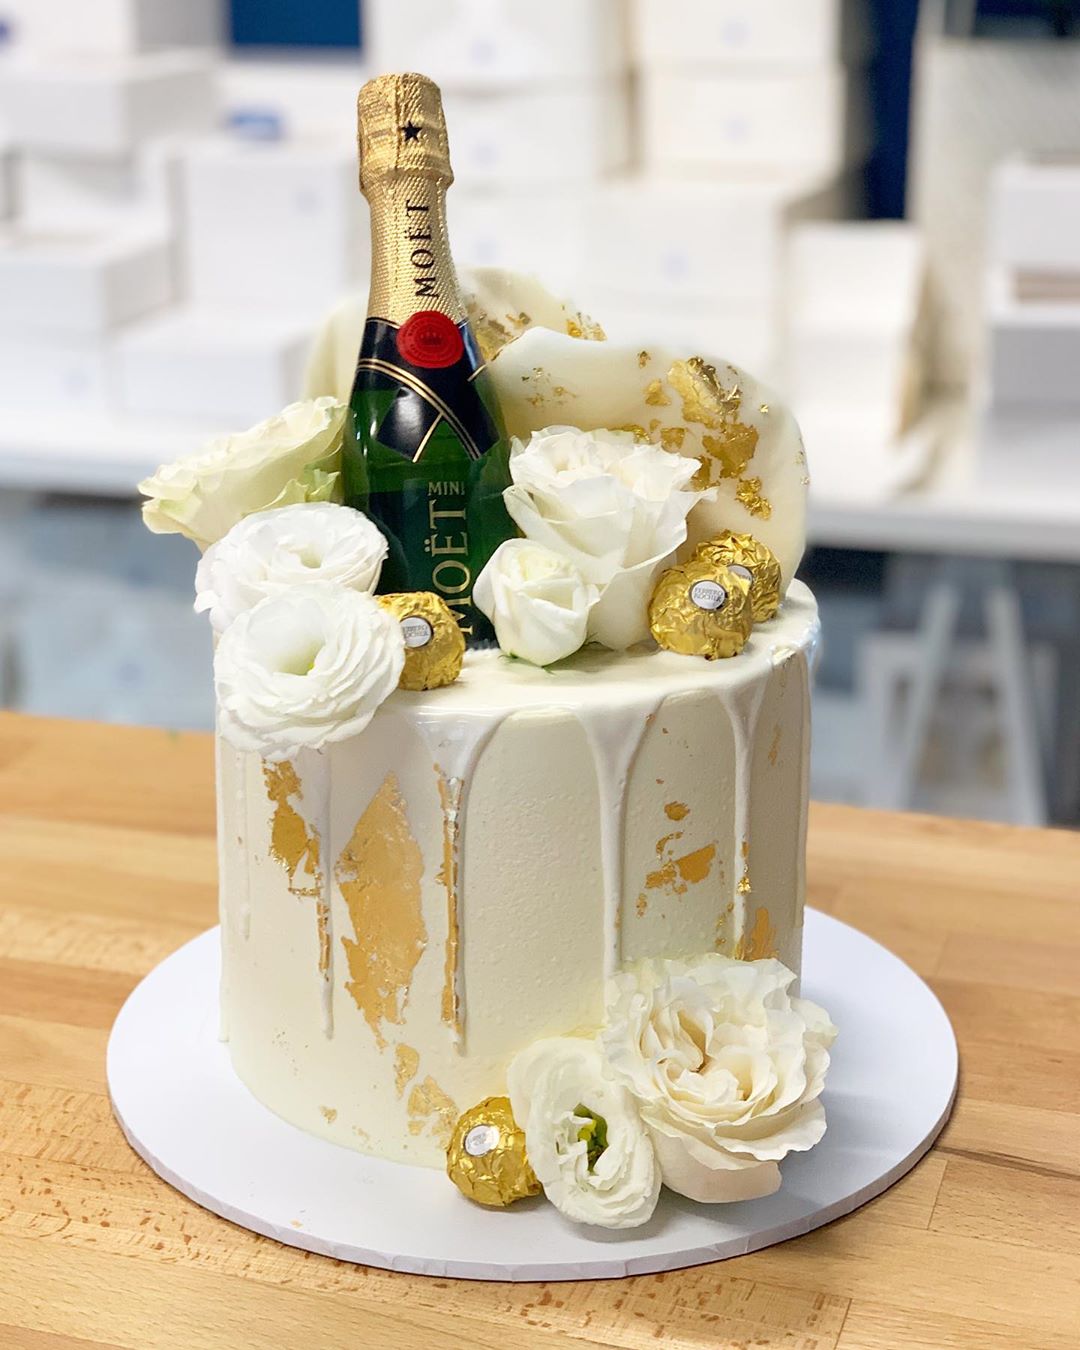 The Classy Celebration Cake